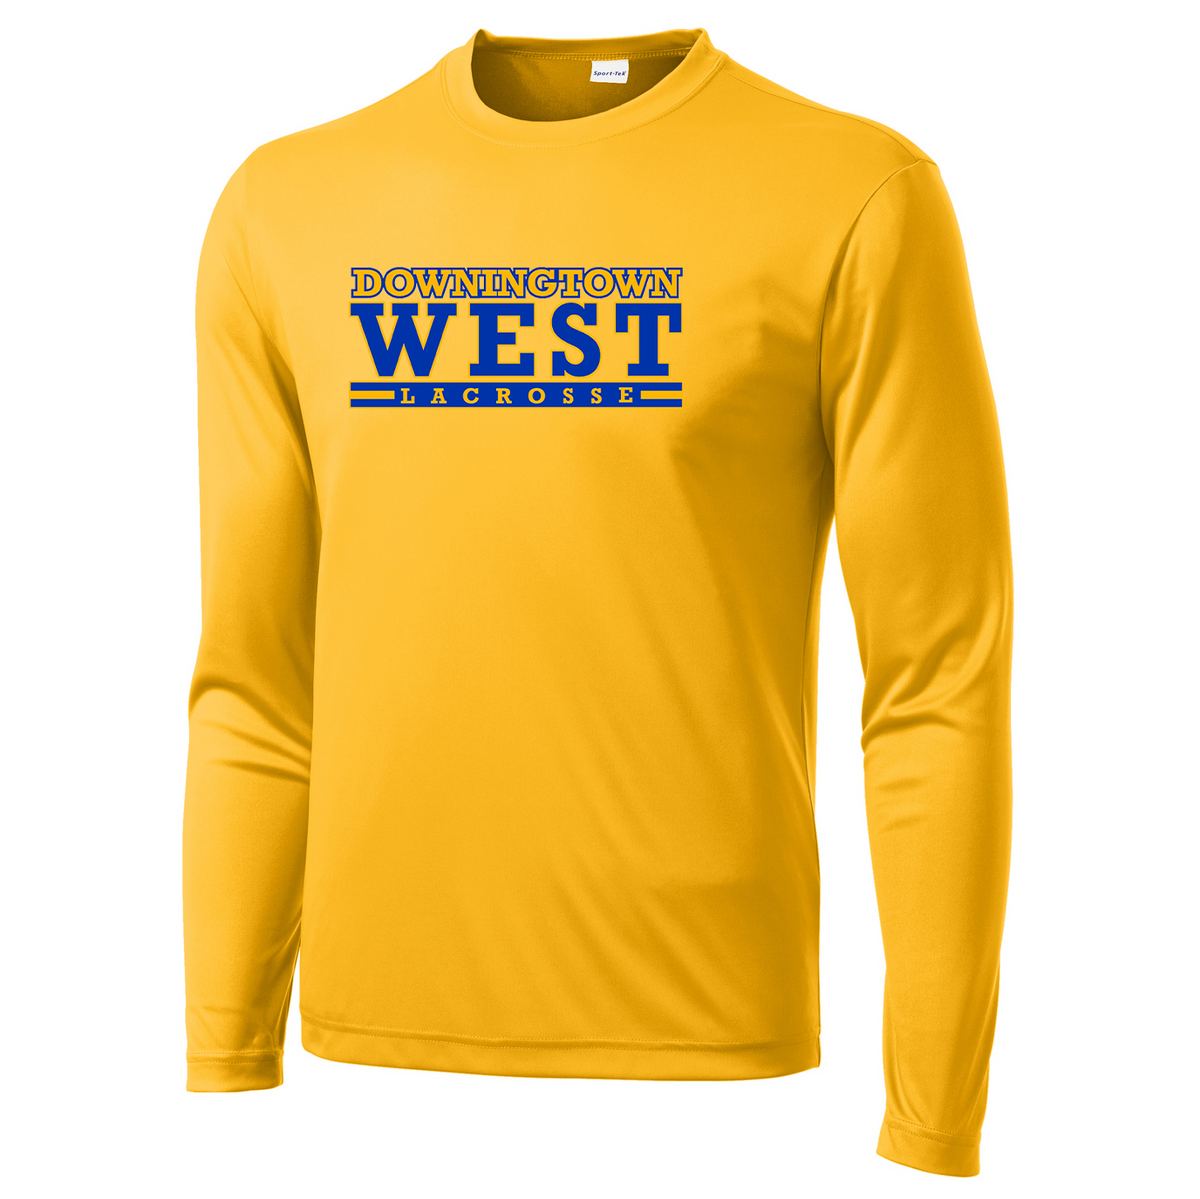 Downingtown West Lacrosse Long Sleeve Performance Shirt